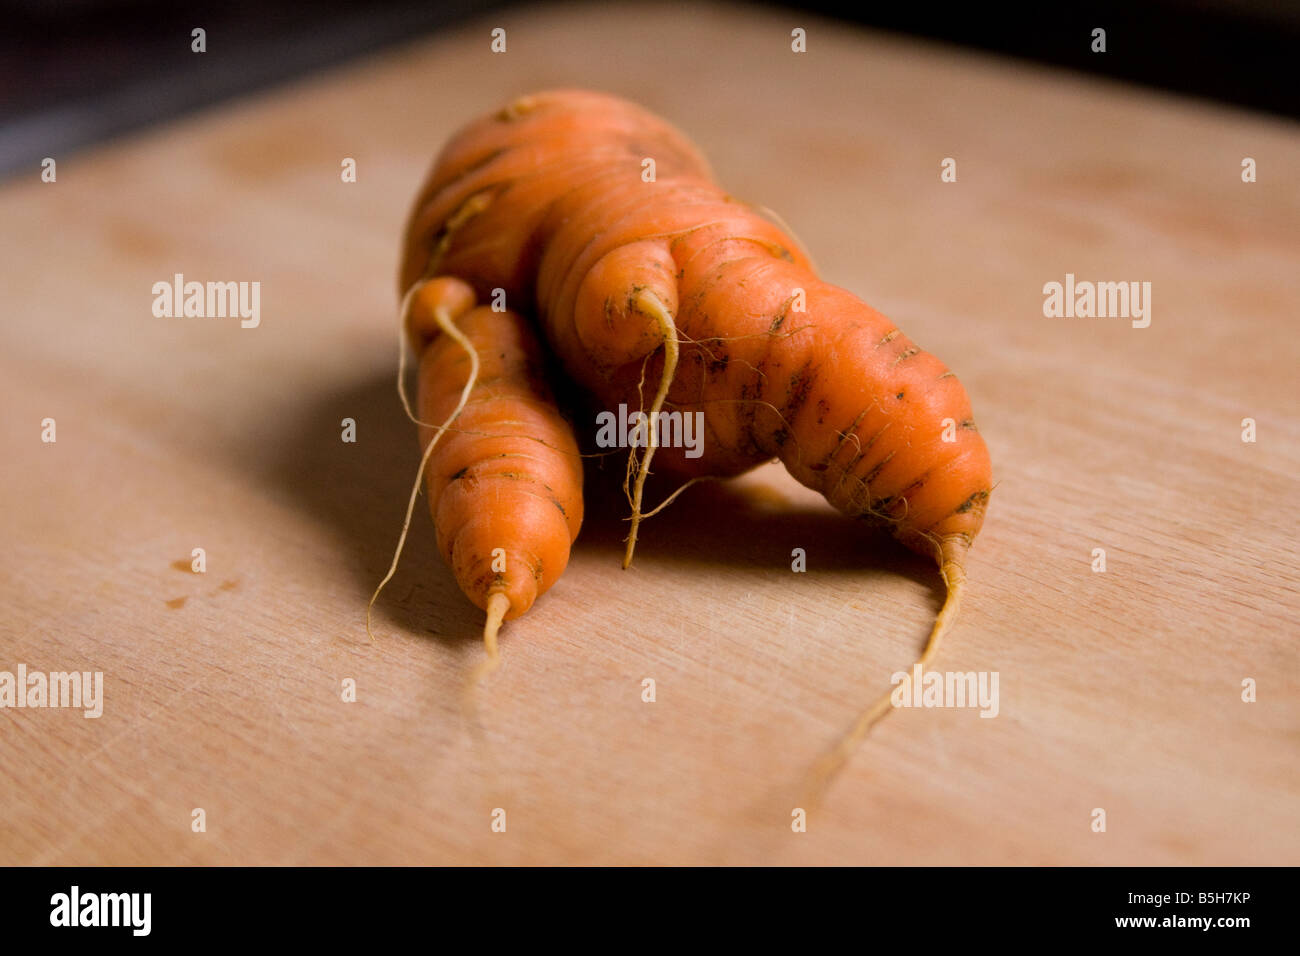 Misshapen home-grown carrots on wooden chopping board Stock Photo